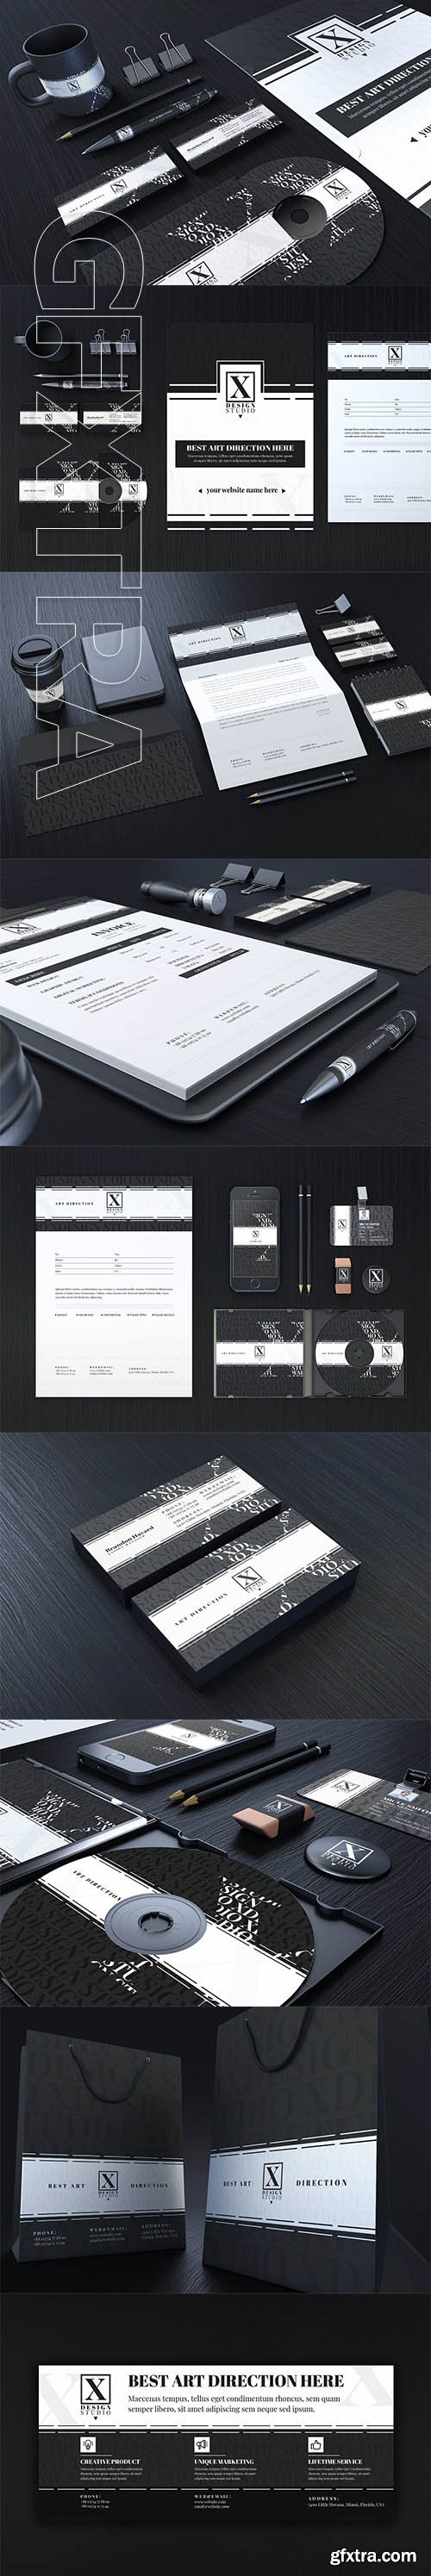 CreativeMarket - X Design Studio Branding Identity 3760559